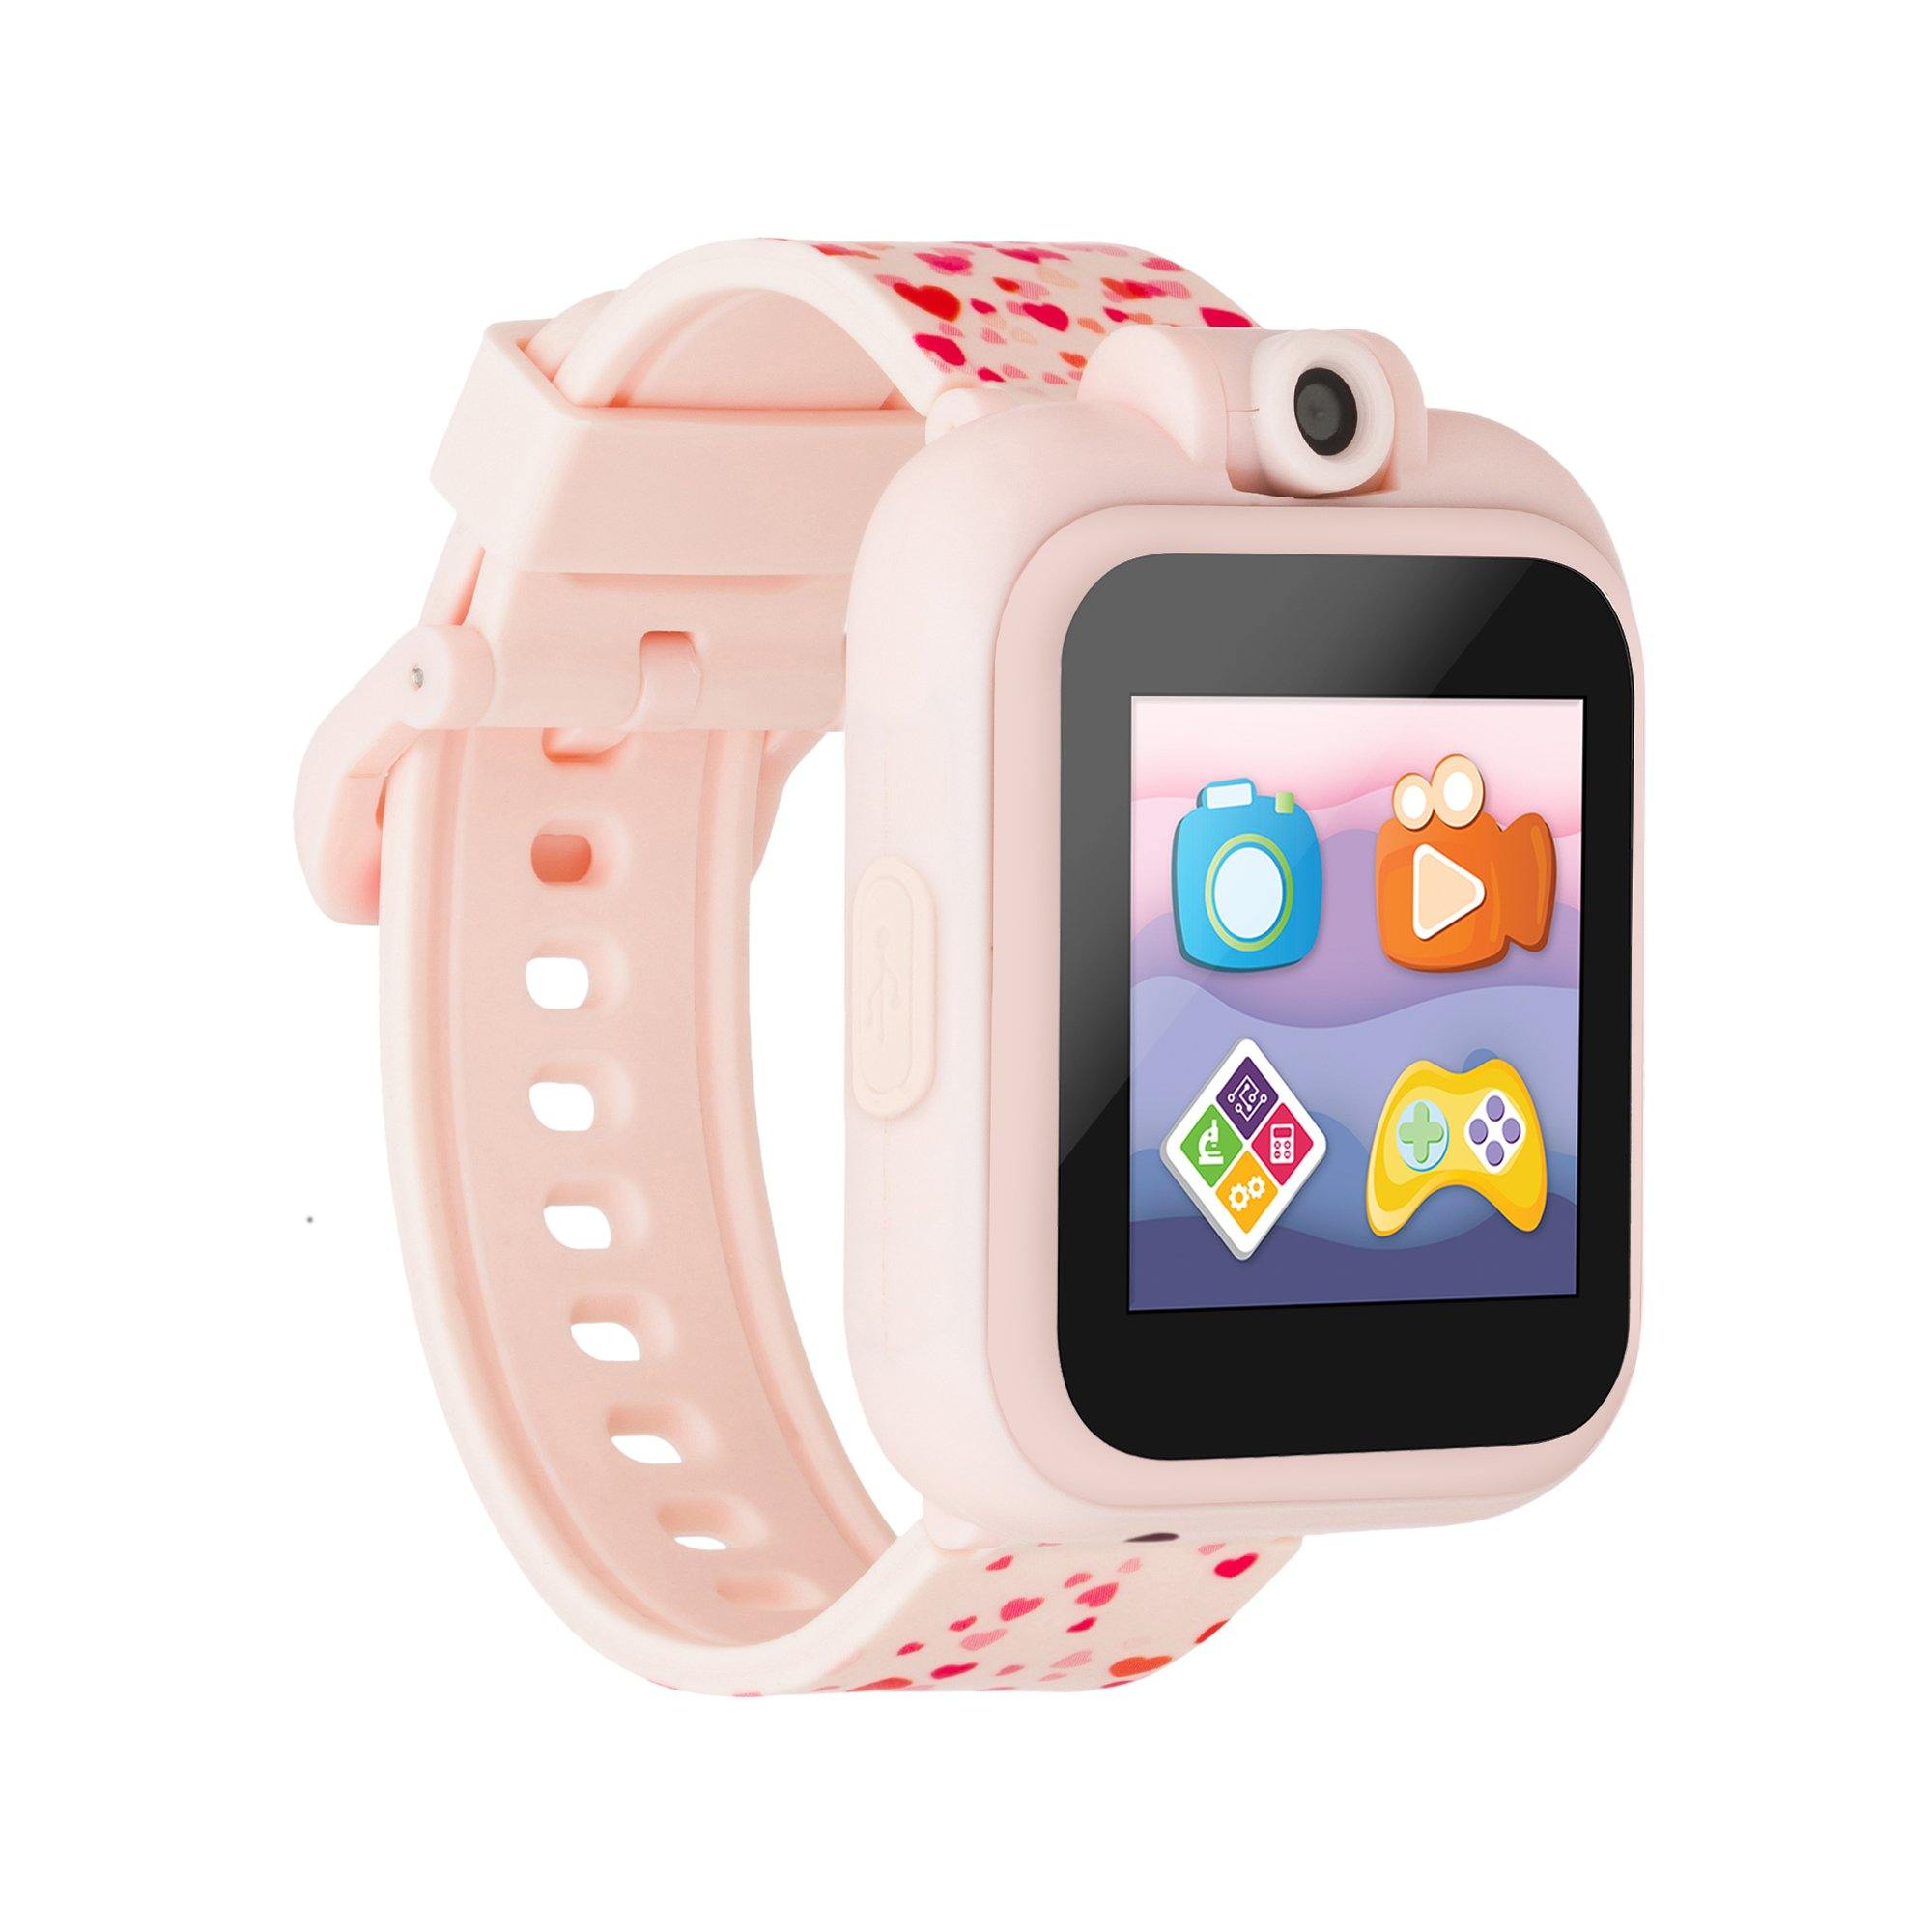 PlayZoom 2 Kids Smartwatch: Blush Hearts affordable smart watch